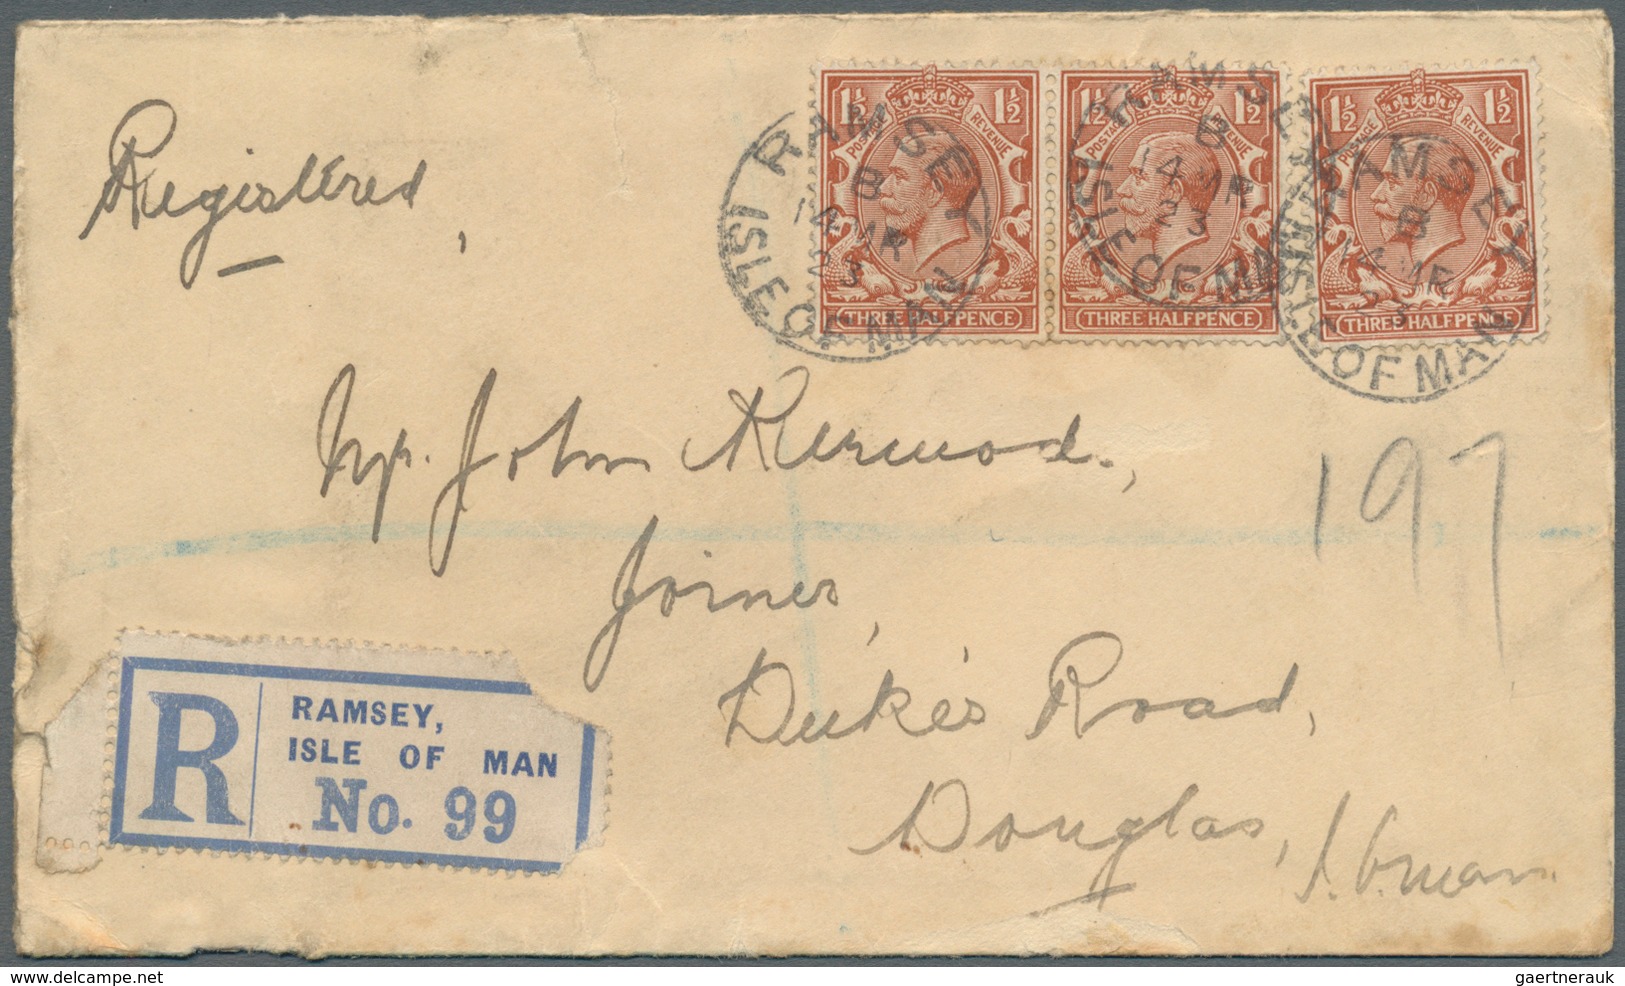 Großbritannien - Isle of Man: 1852/1937: Very fine lot of 39 village postmarks on envelopes, picture